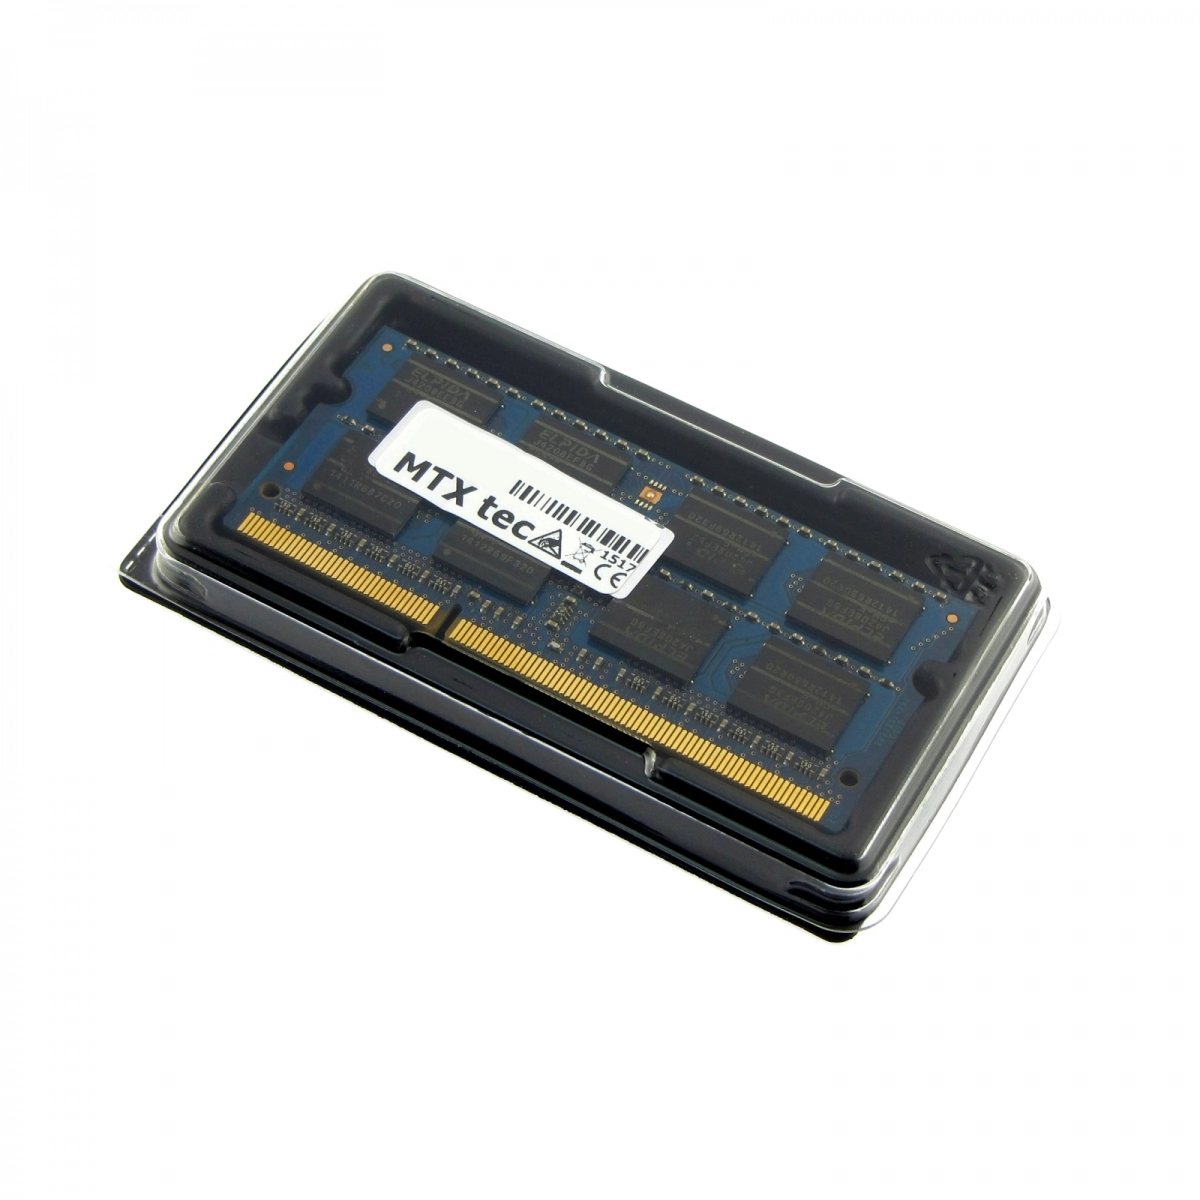 MTXtec 8GB, 8192MB Notebook Arbeitsspeicher SODIMM DDR3 PC3-12800, 1600MHz, 204 Pin, 1.35V RAM Laptop-Speicher